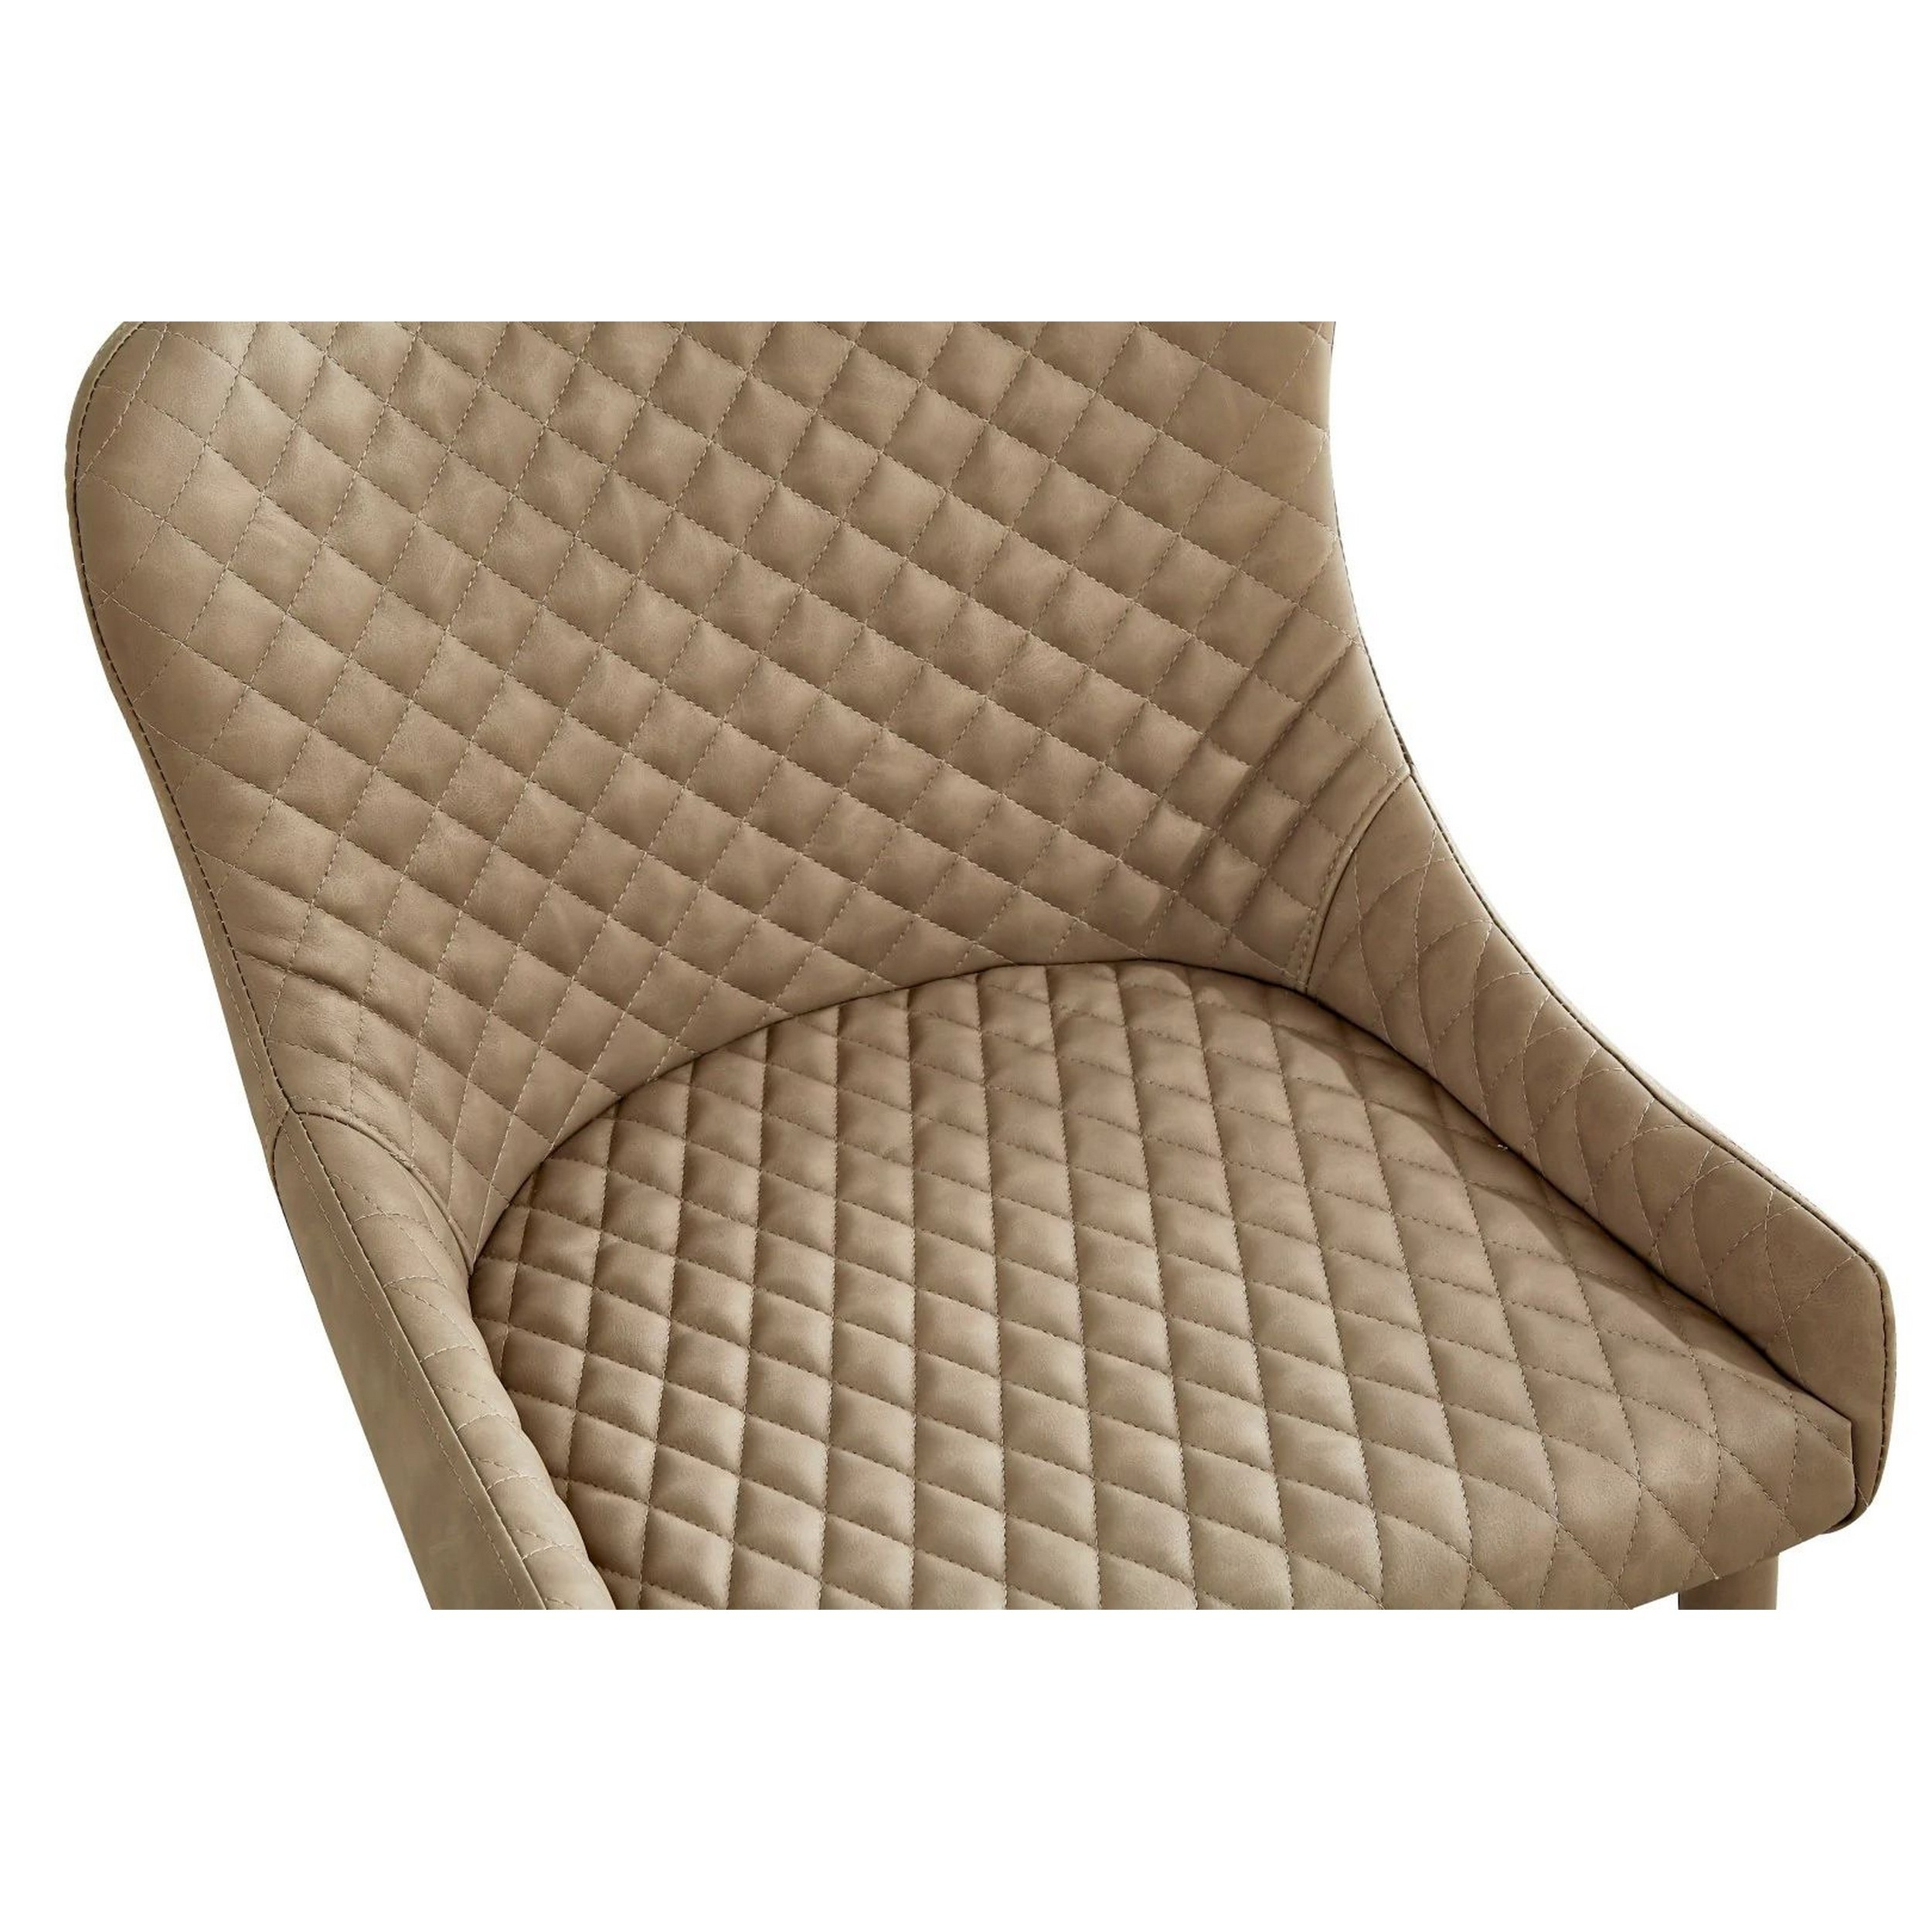 Tika 26 Inch Counter Height Chair, Set Of 2, Faux Leather, Light Gray- Saltoro Sherpi